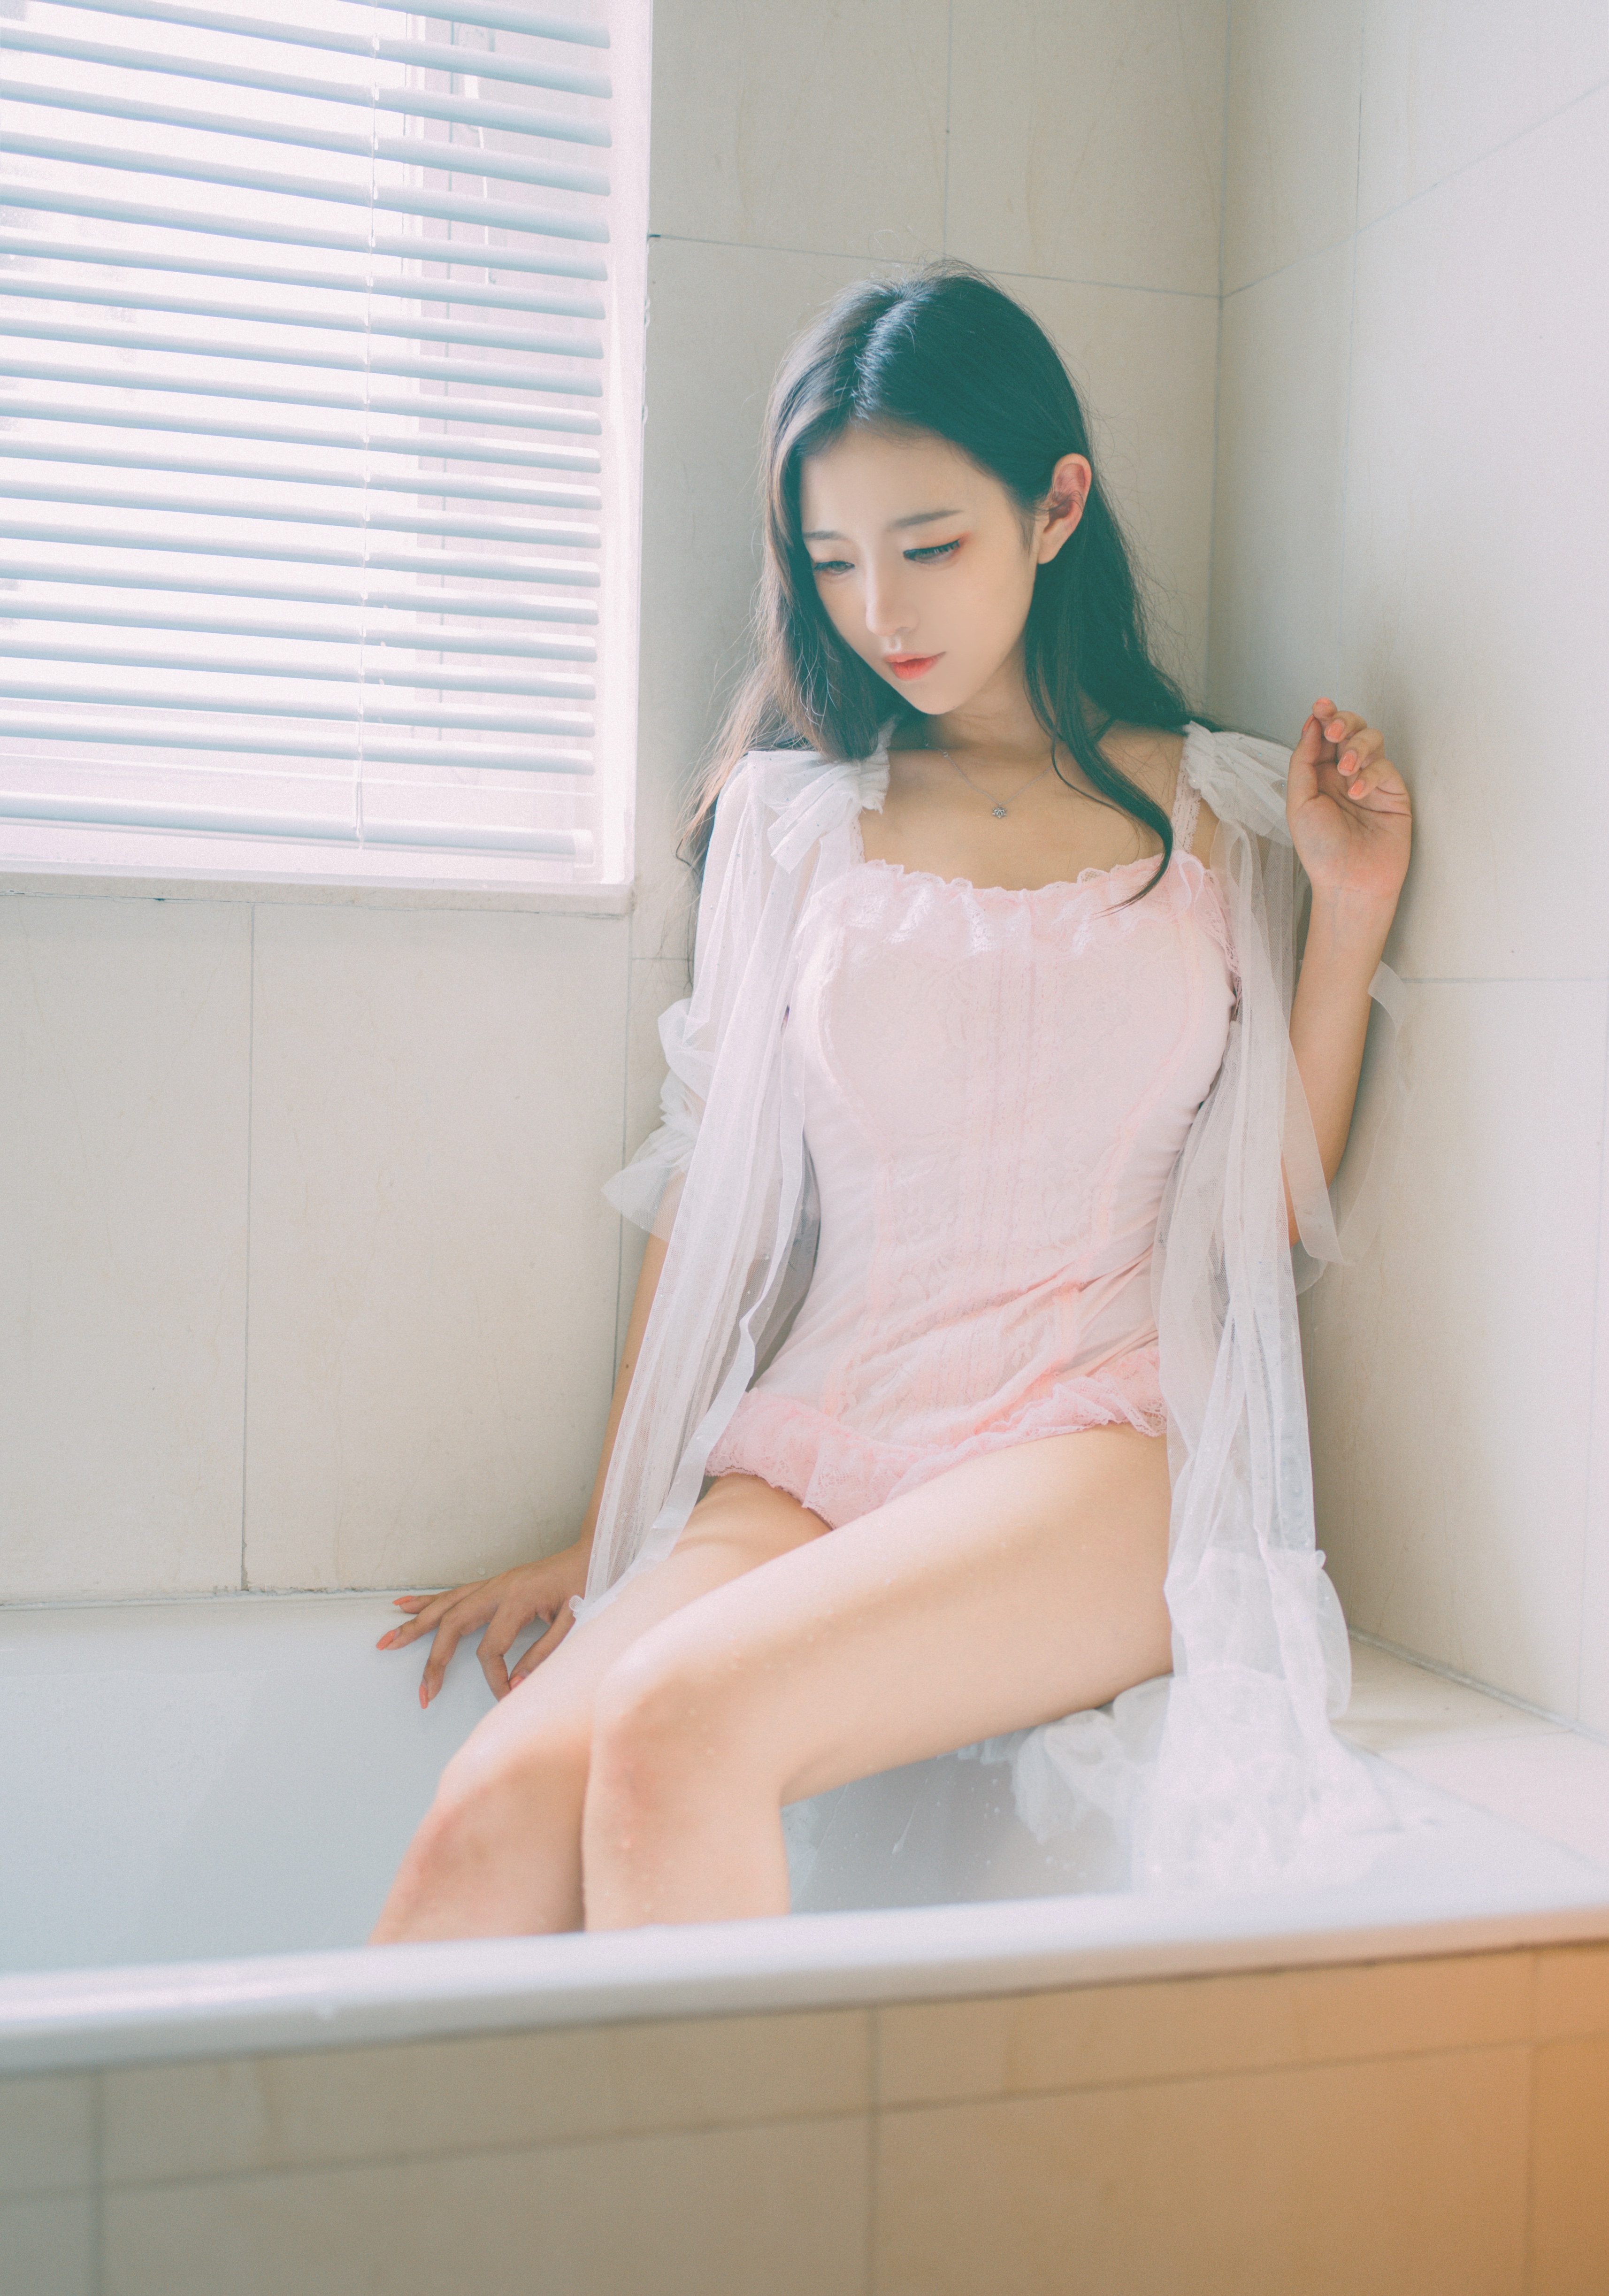 People 3428x4891 Asian bathtub long hair pink corset women